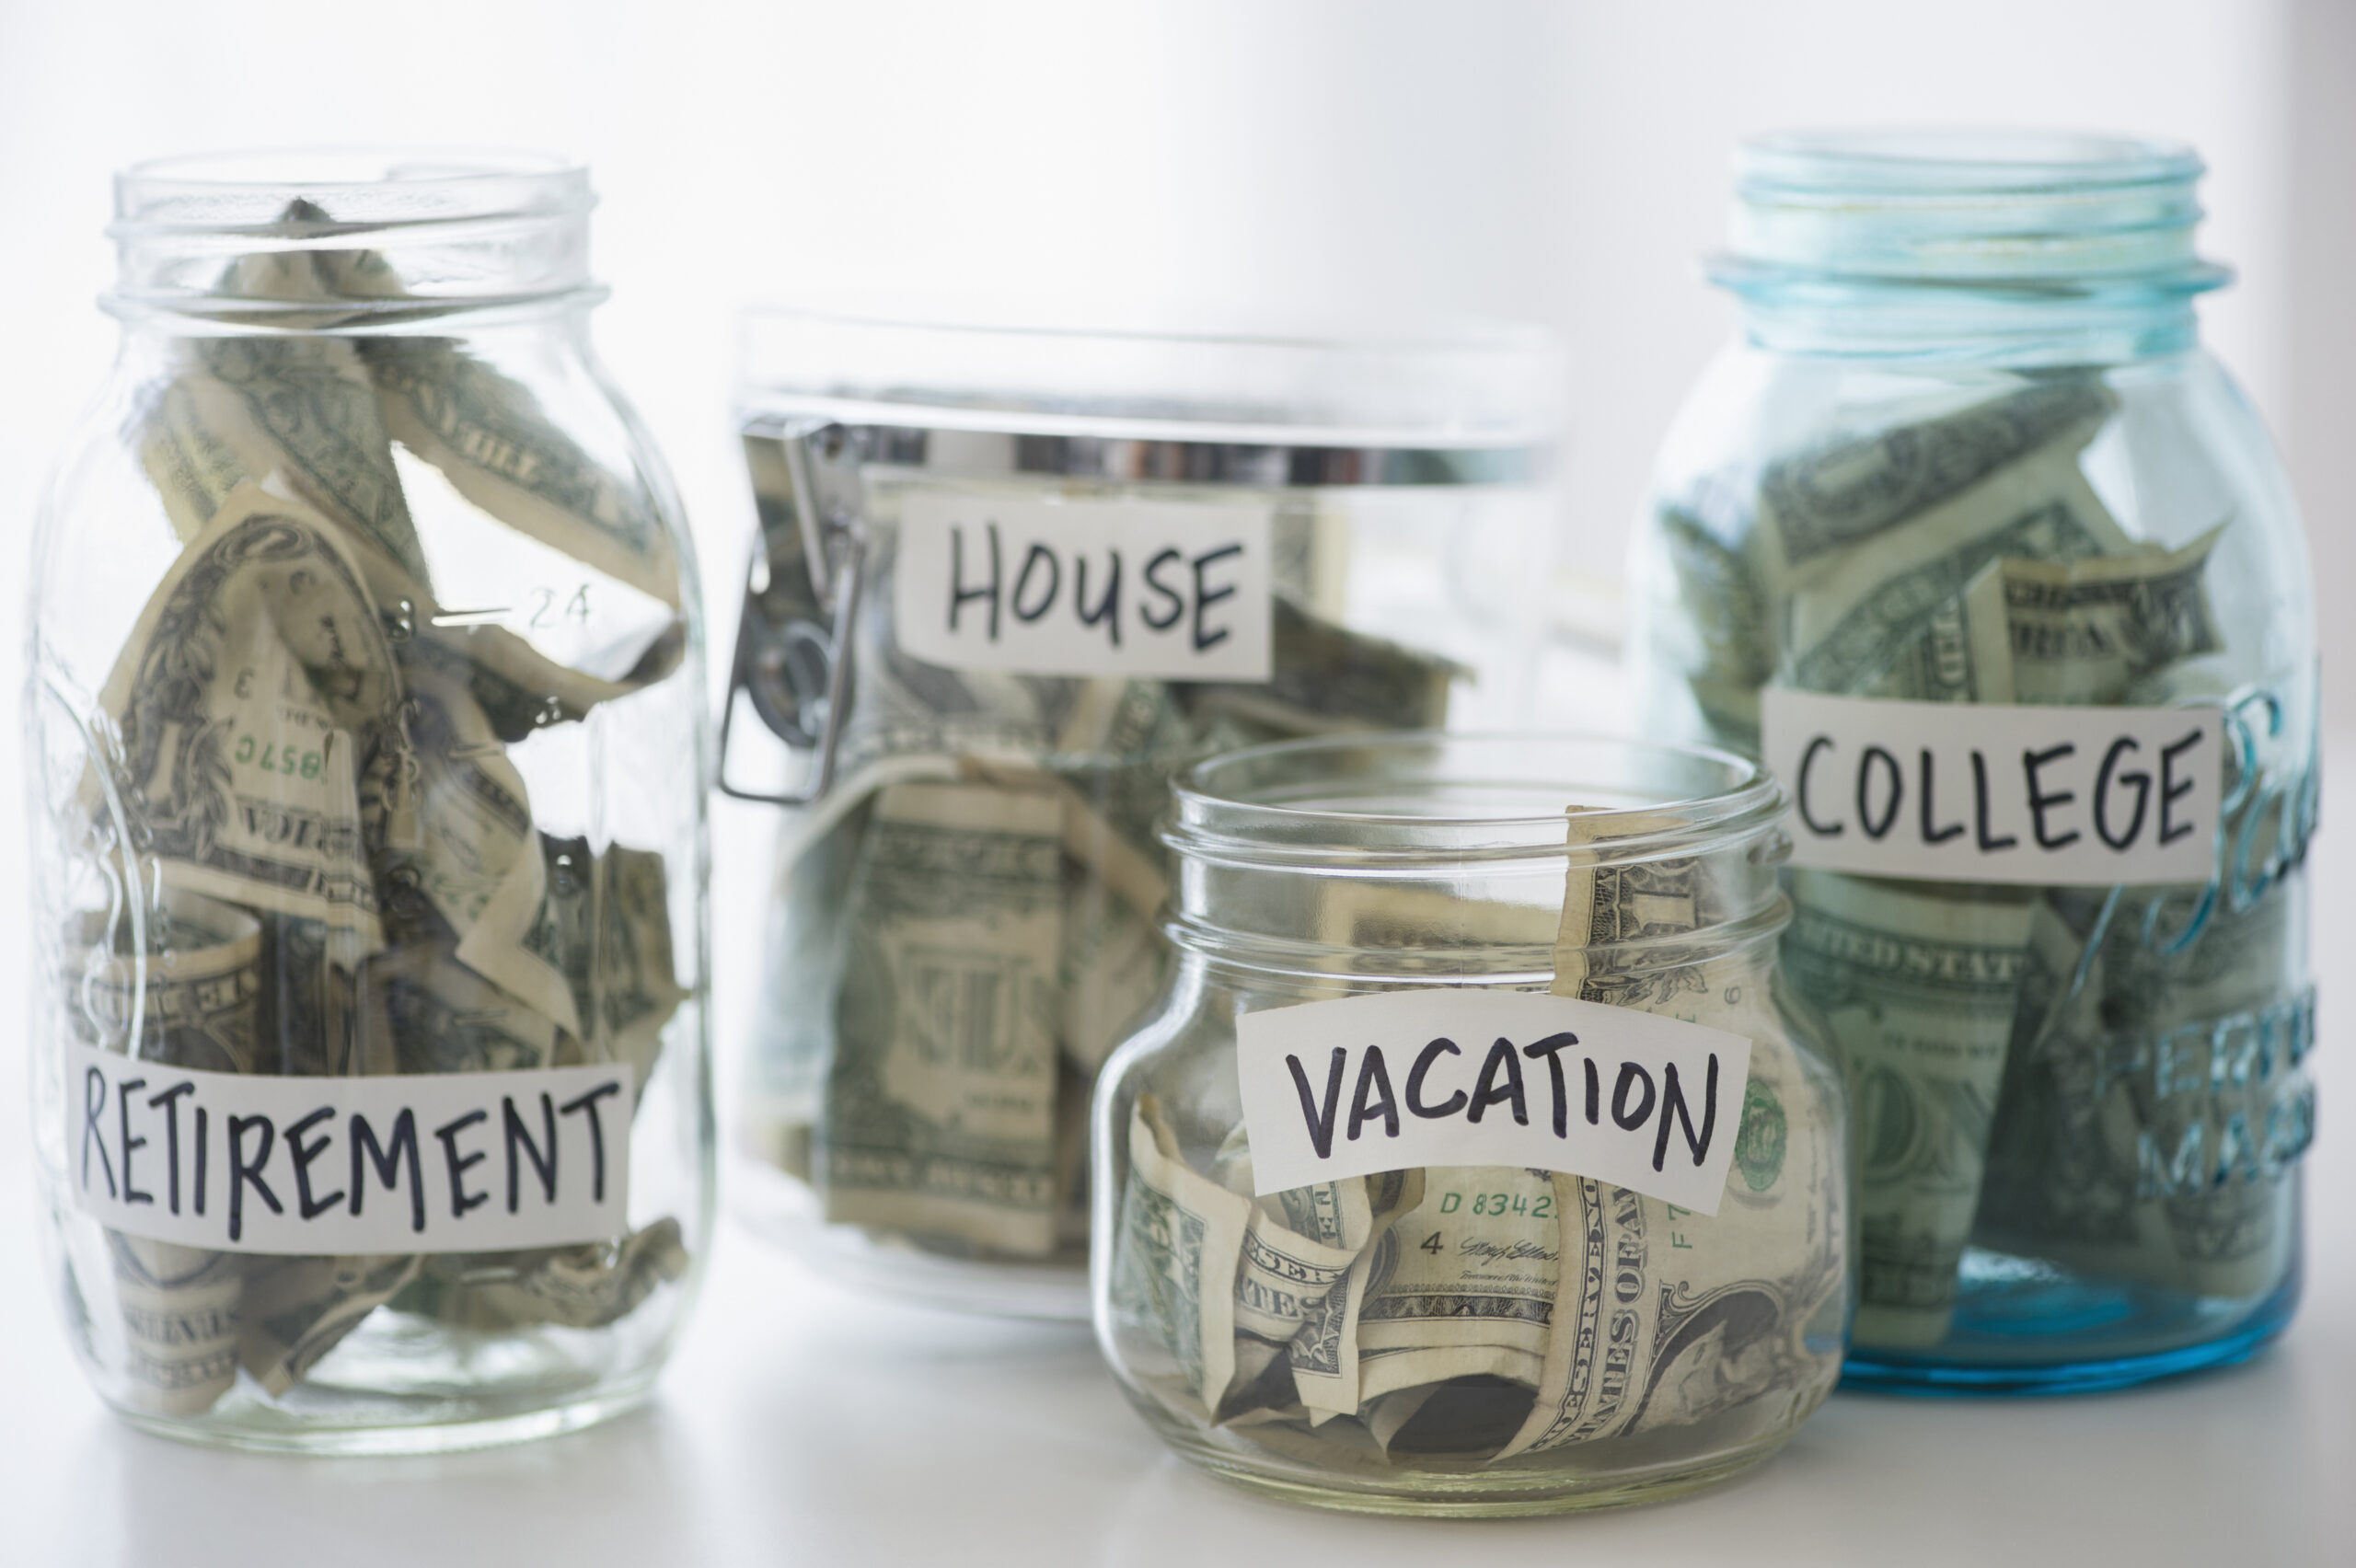 Money in jars related to BankBlack Savings